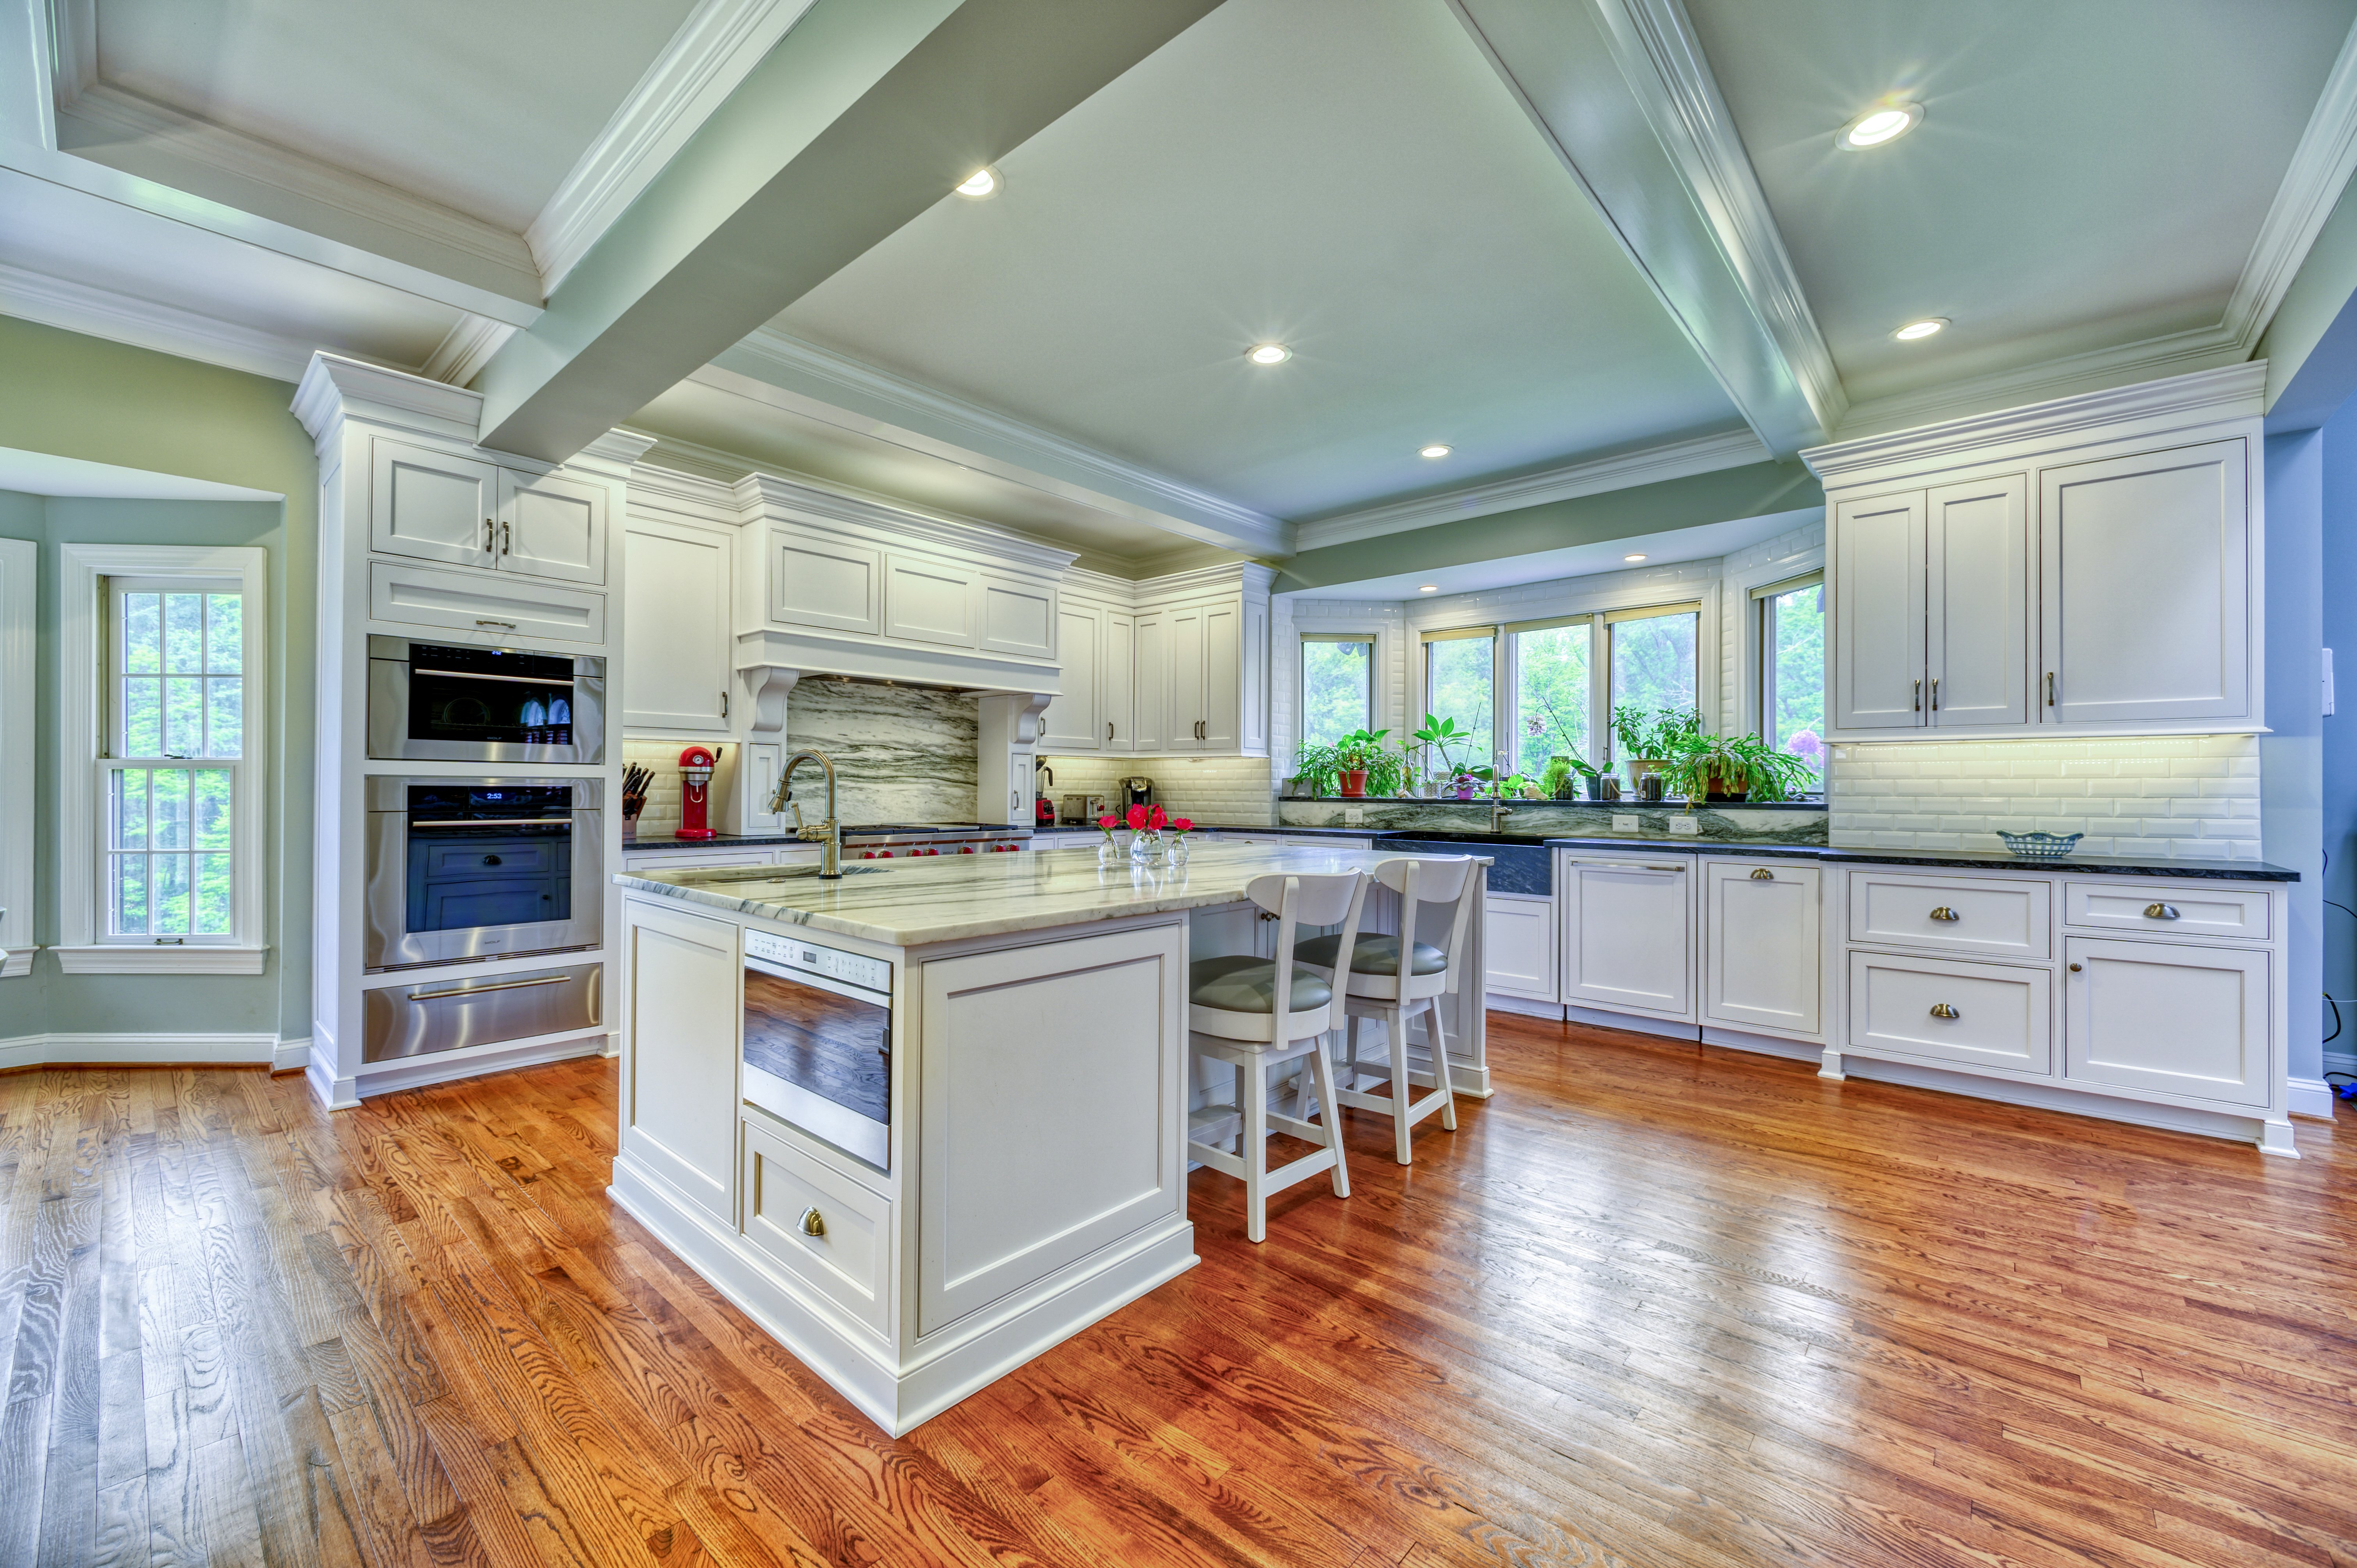 Hard wood flooring in open spacious kitchen